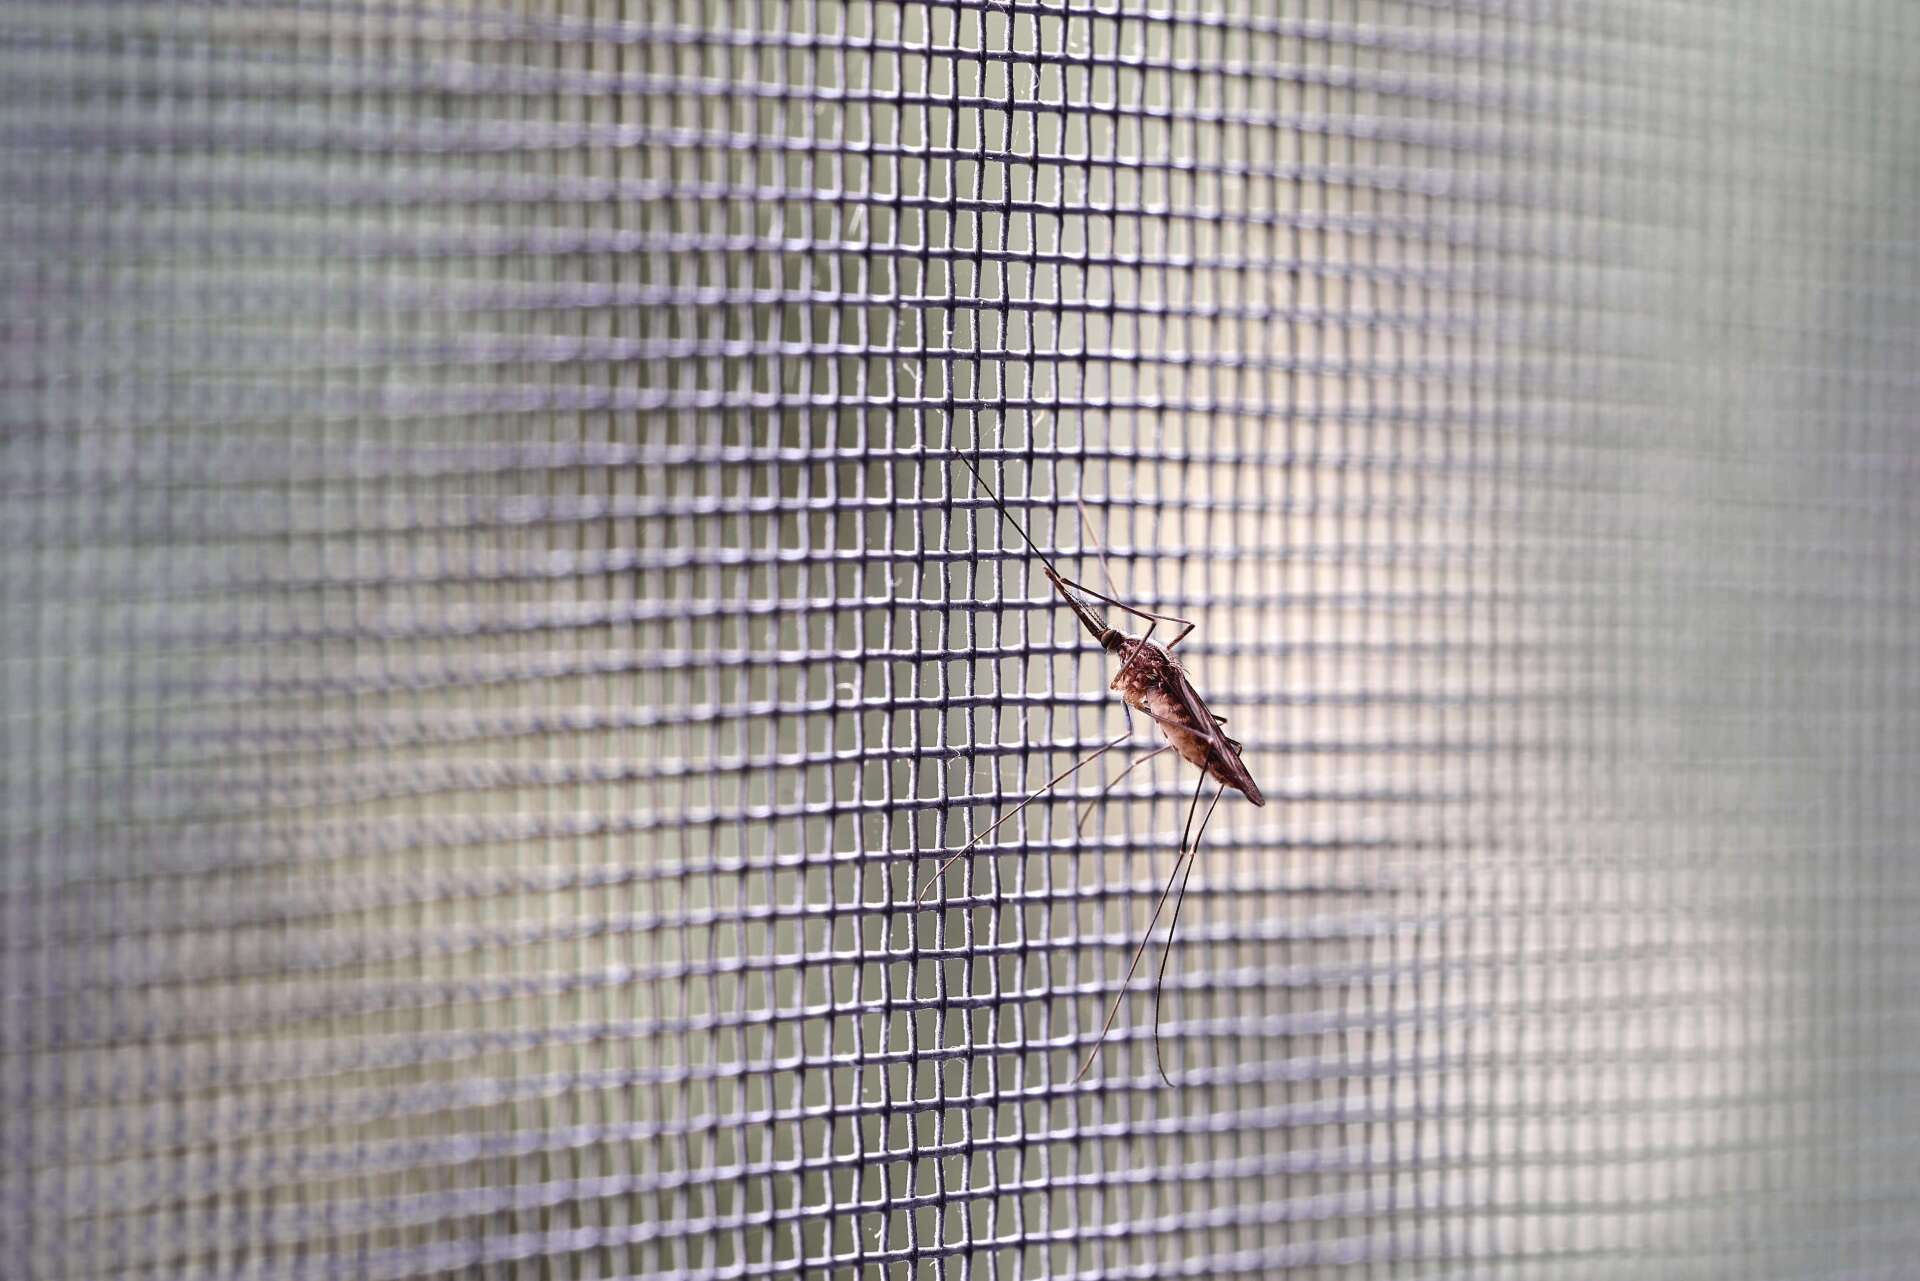 Mosquito sitting on a patio screen door